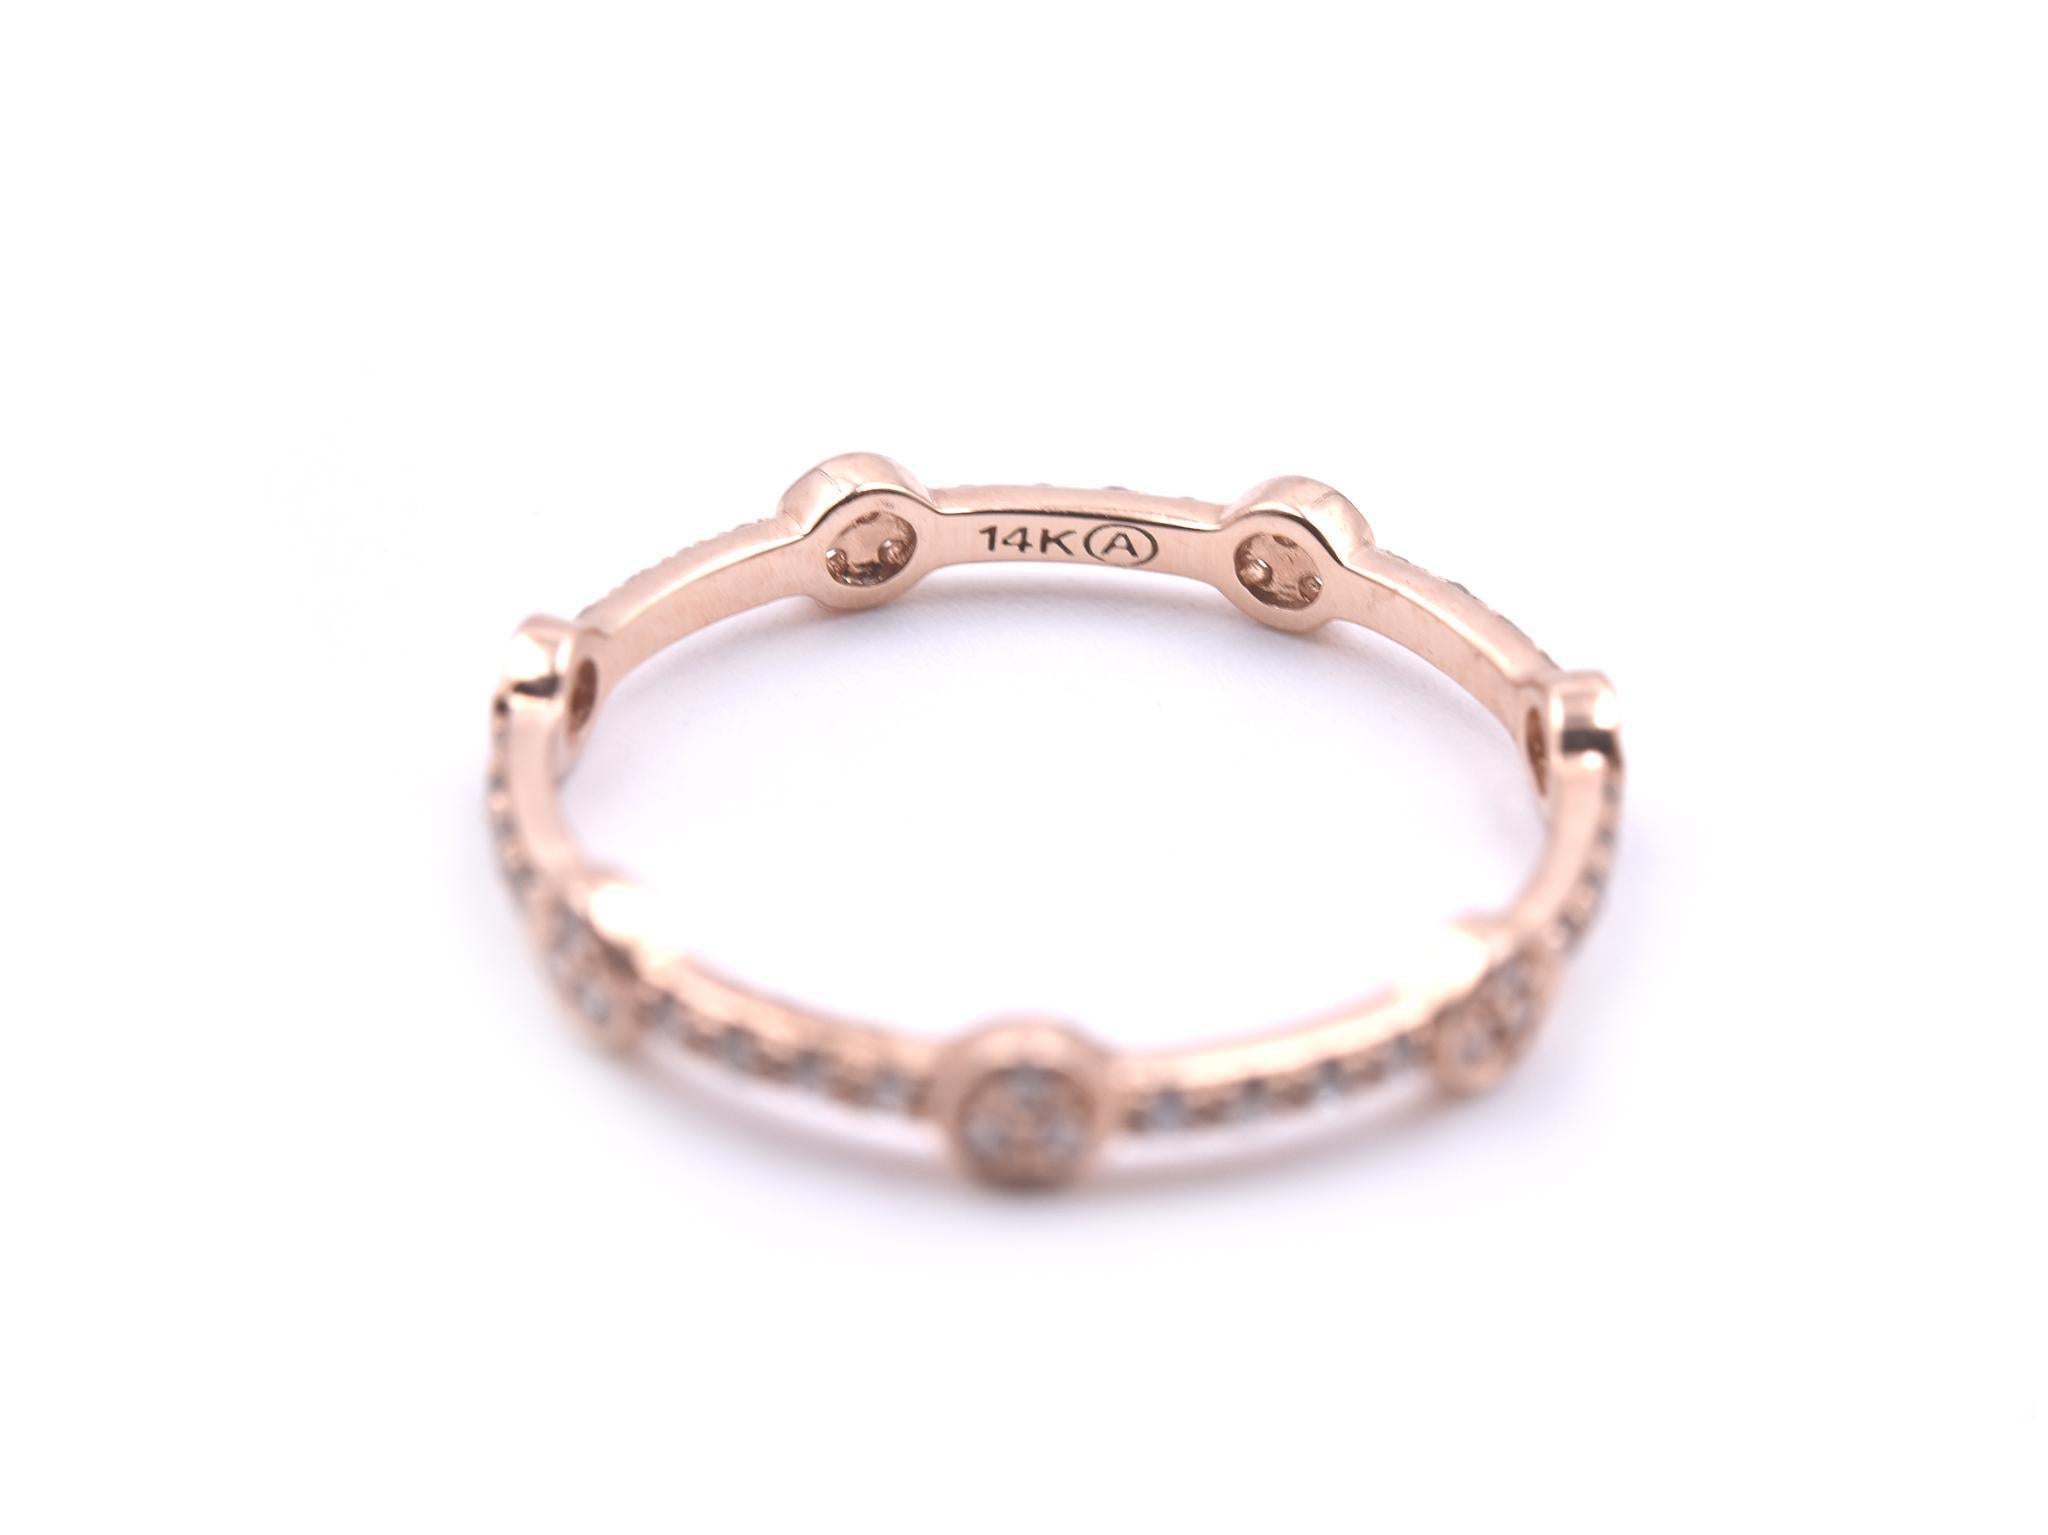 Designer: custom design
Material: 14k rose gold
Diamonds: 49 round brilliant cut = .25cttw
Color: G
Clarity: VS
Ring size: 7 ¼ 
Weight: 1.20 grams 
